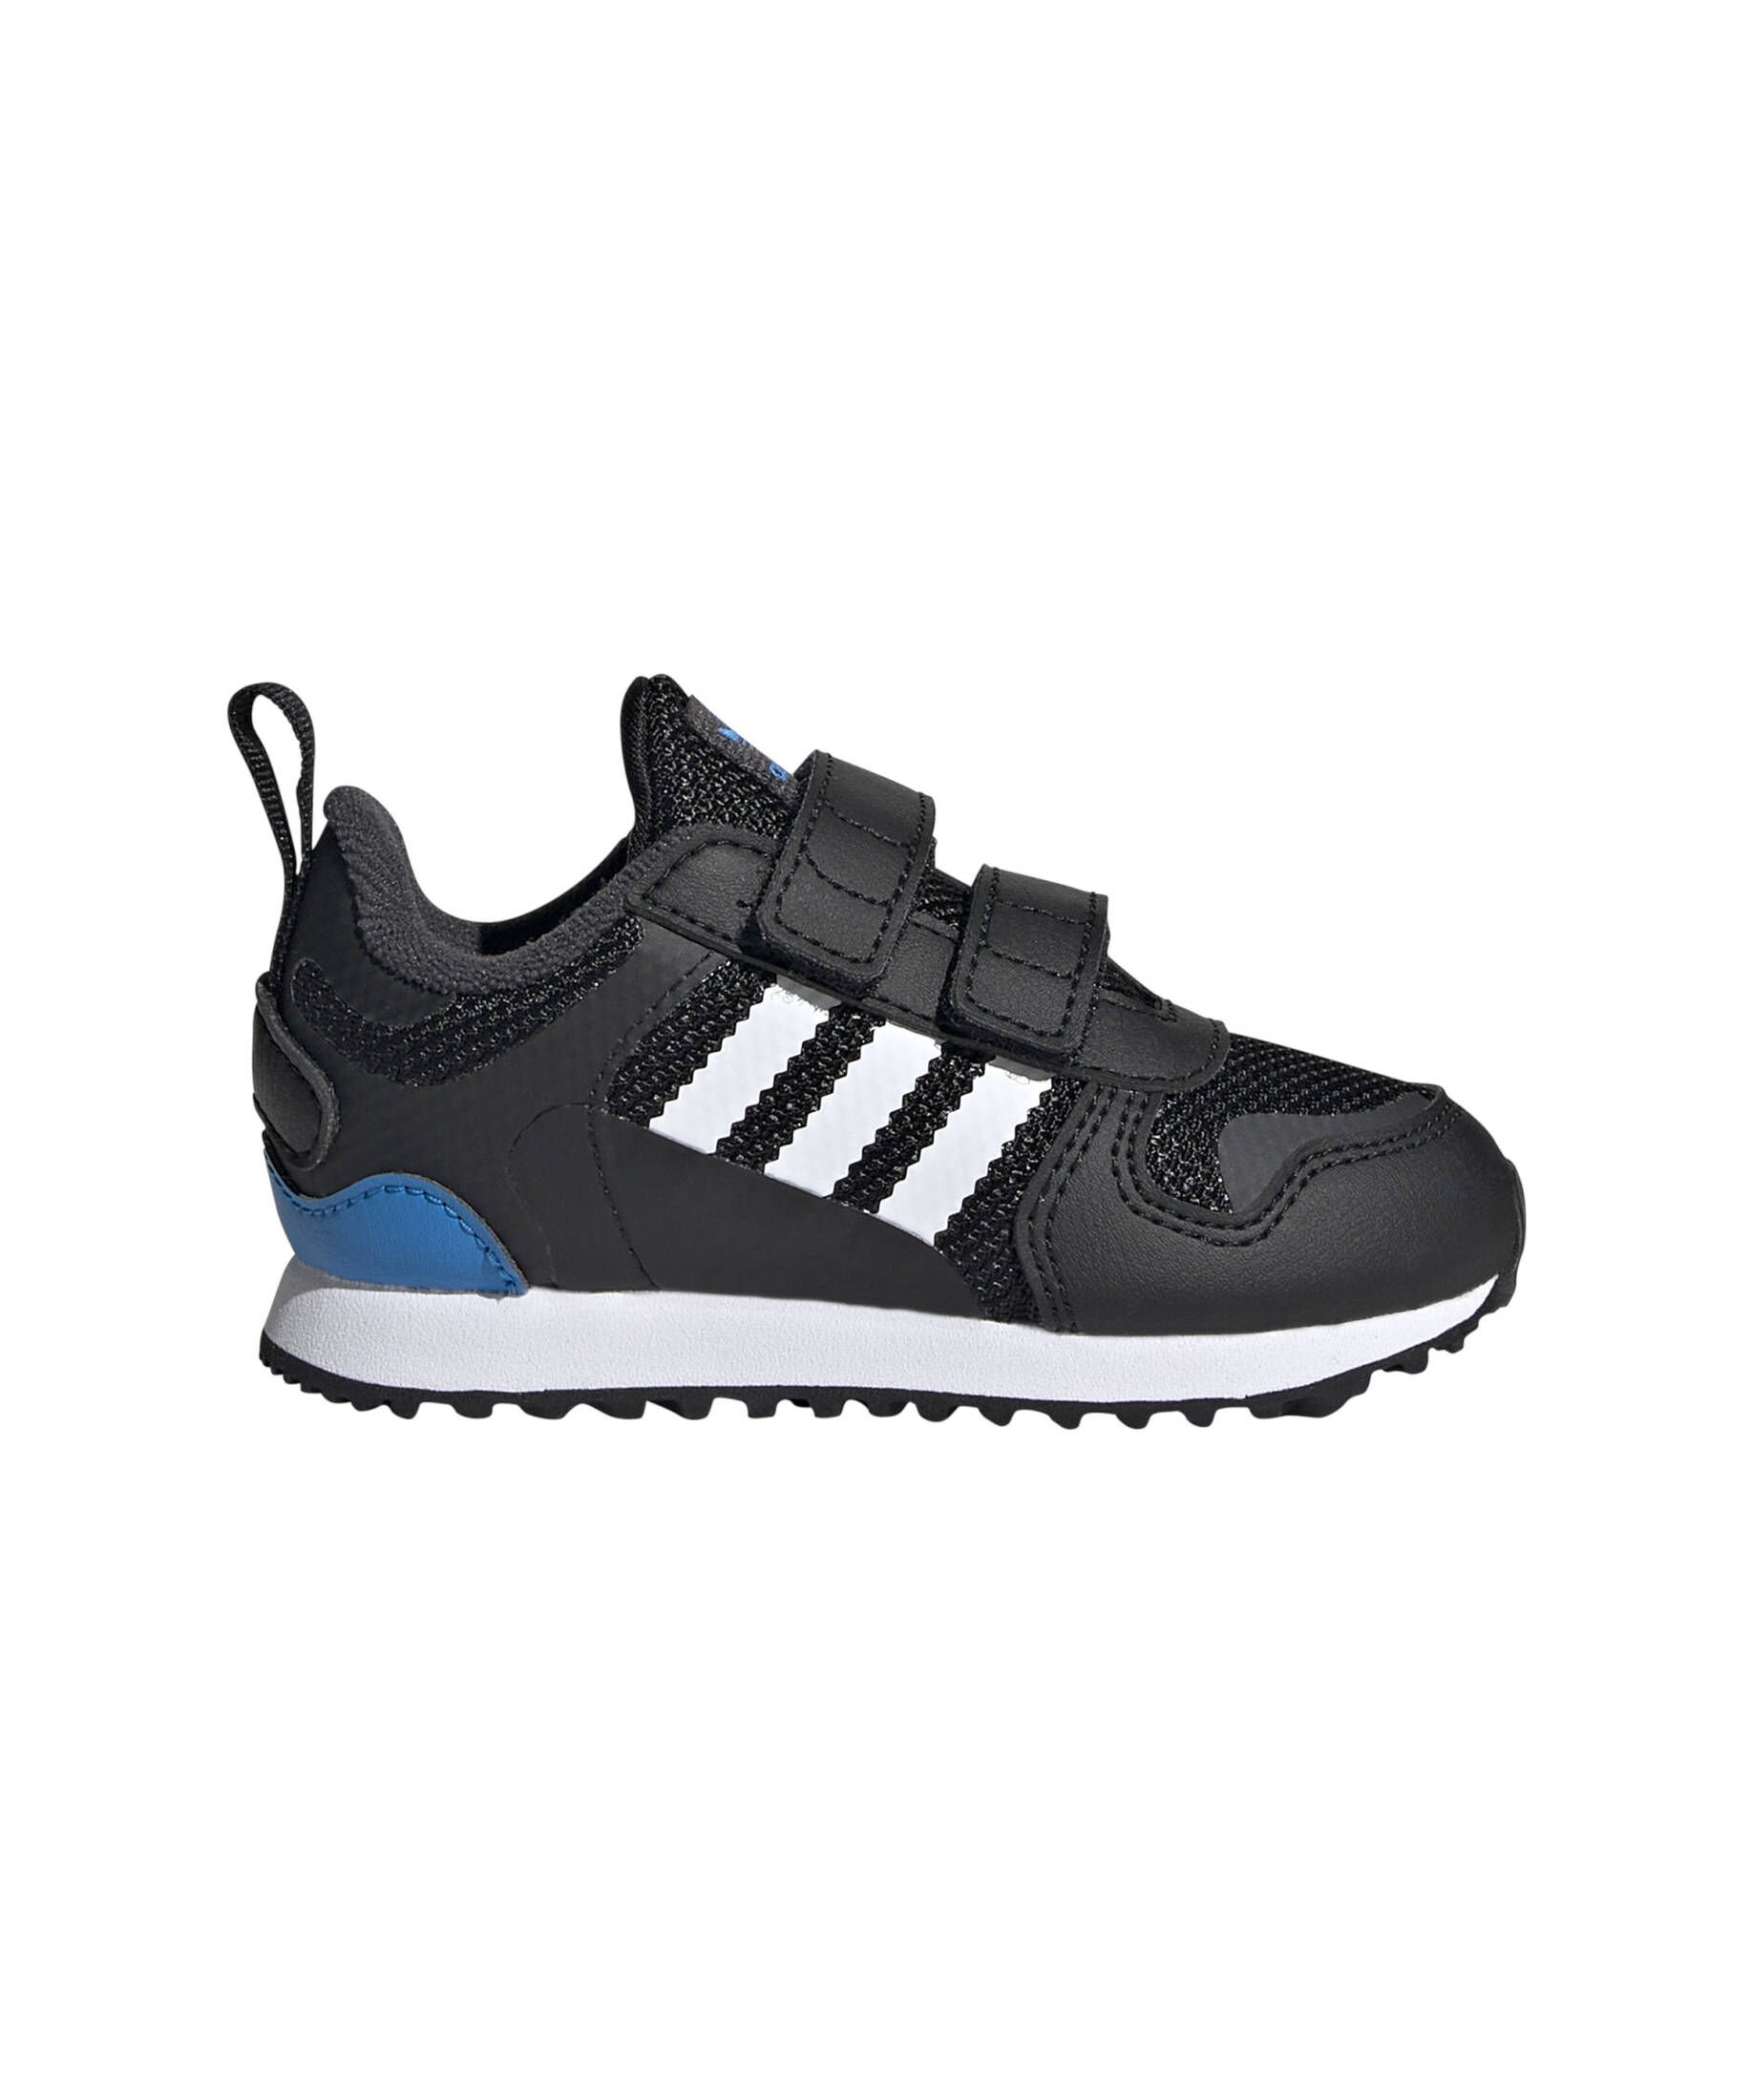 adidas Performance Kinder Lifestyle - Schuhe Kinder Sneakers ZX 700 Kids (I) kaufen | engelhorn